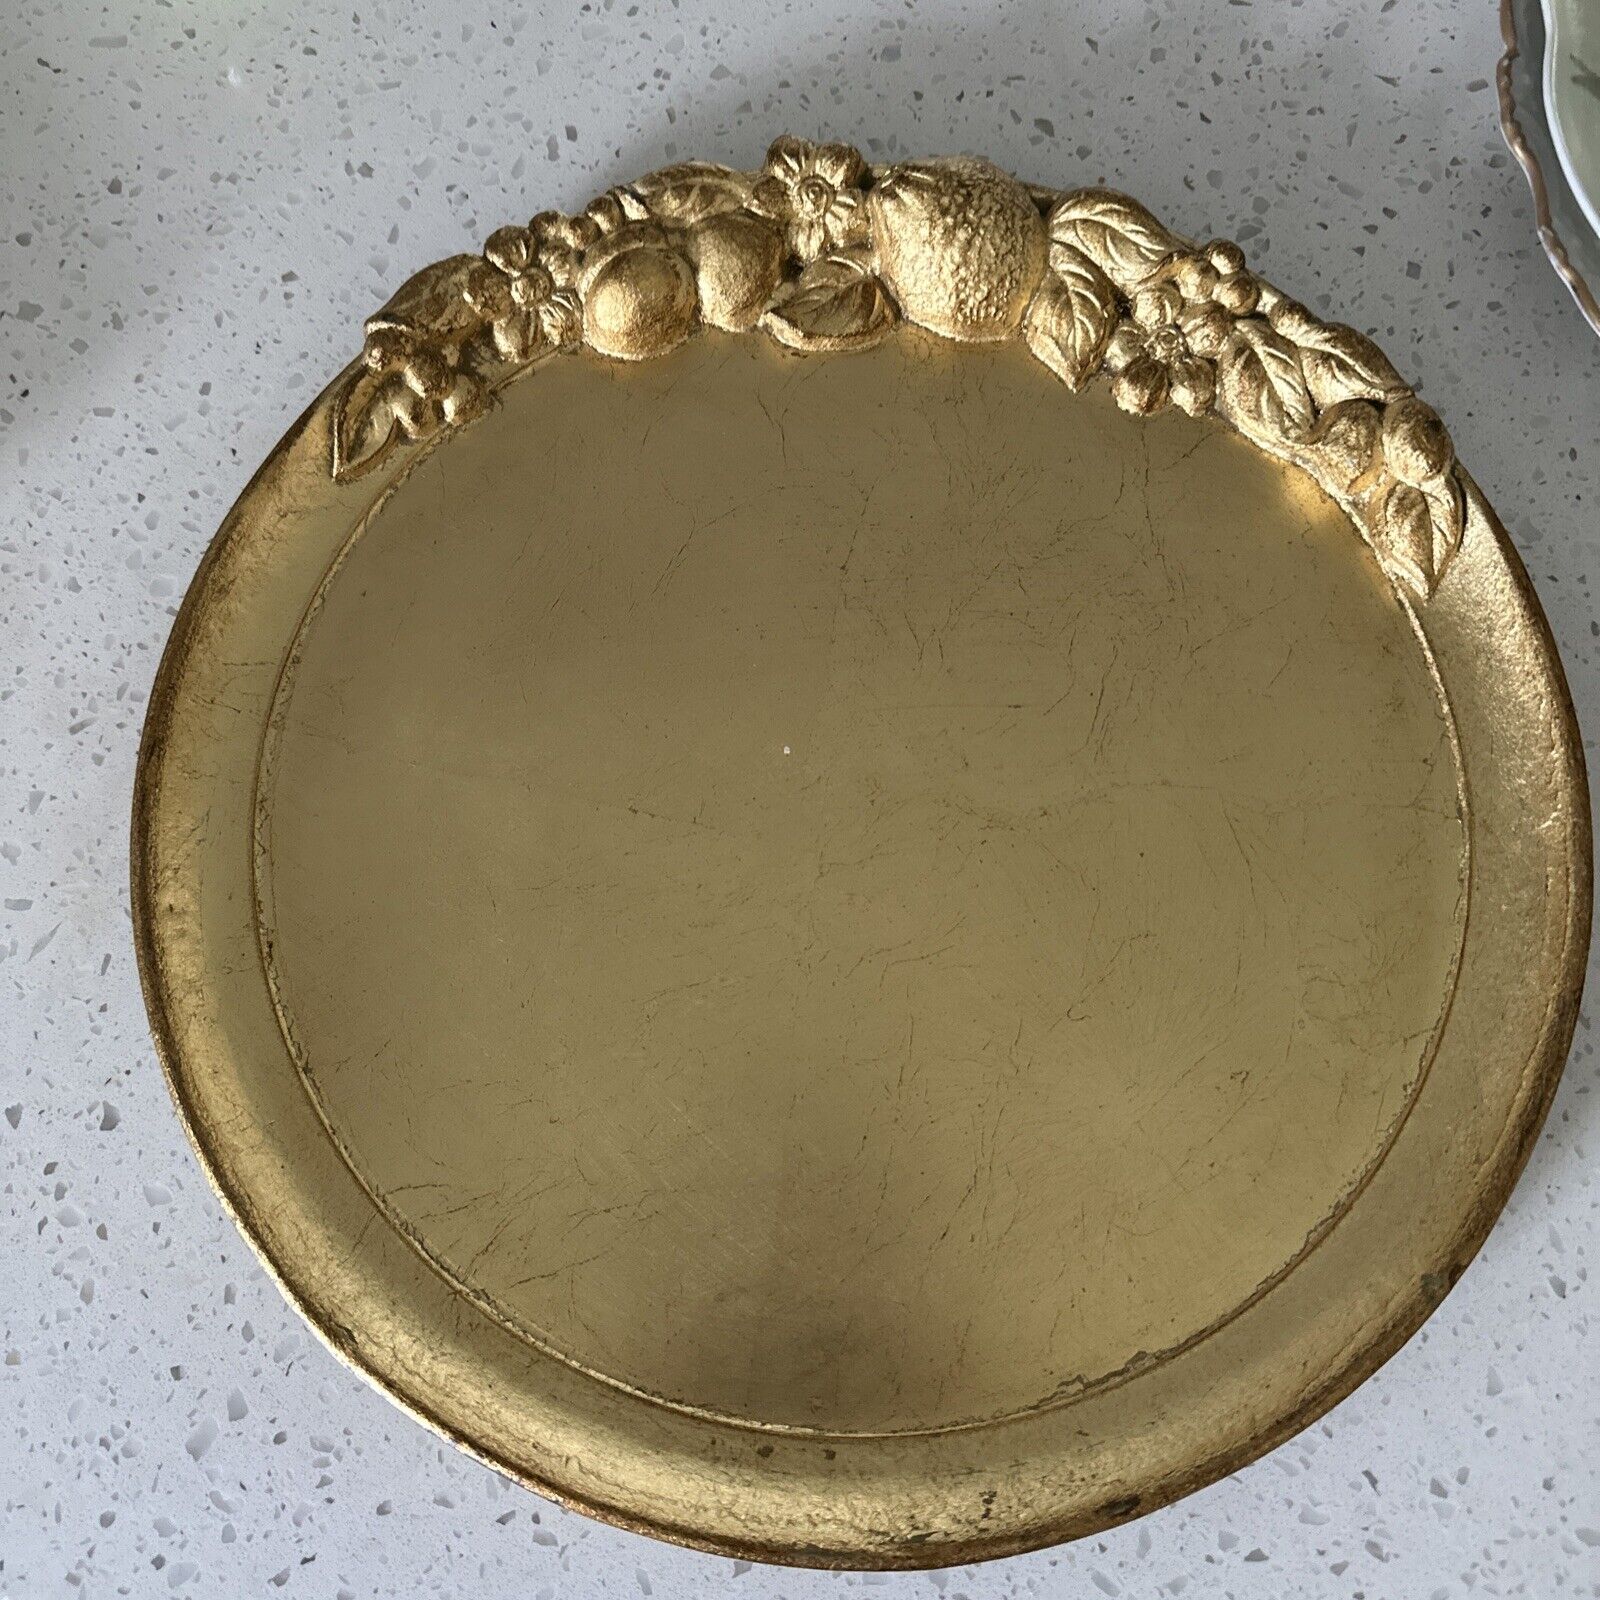 VTG Florentine Gold Gilt Round Fruit Design Decorative Tray 12 1/2” Italy